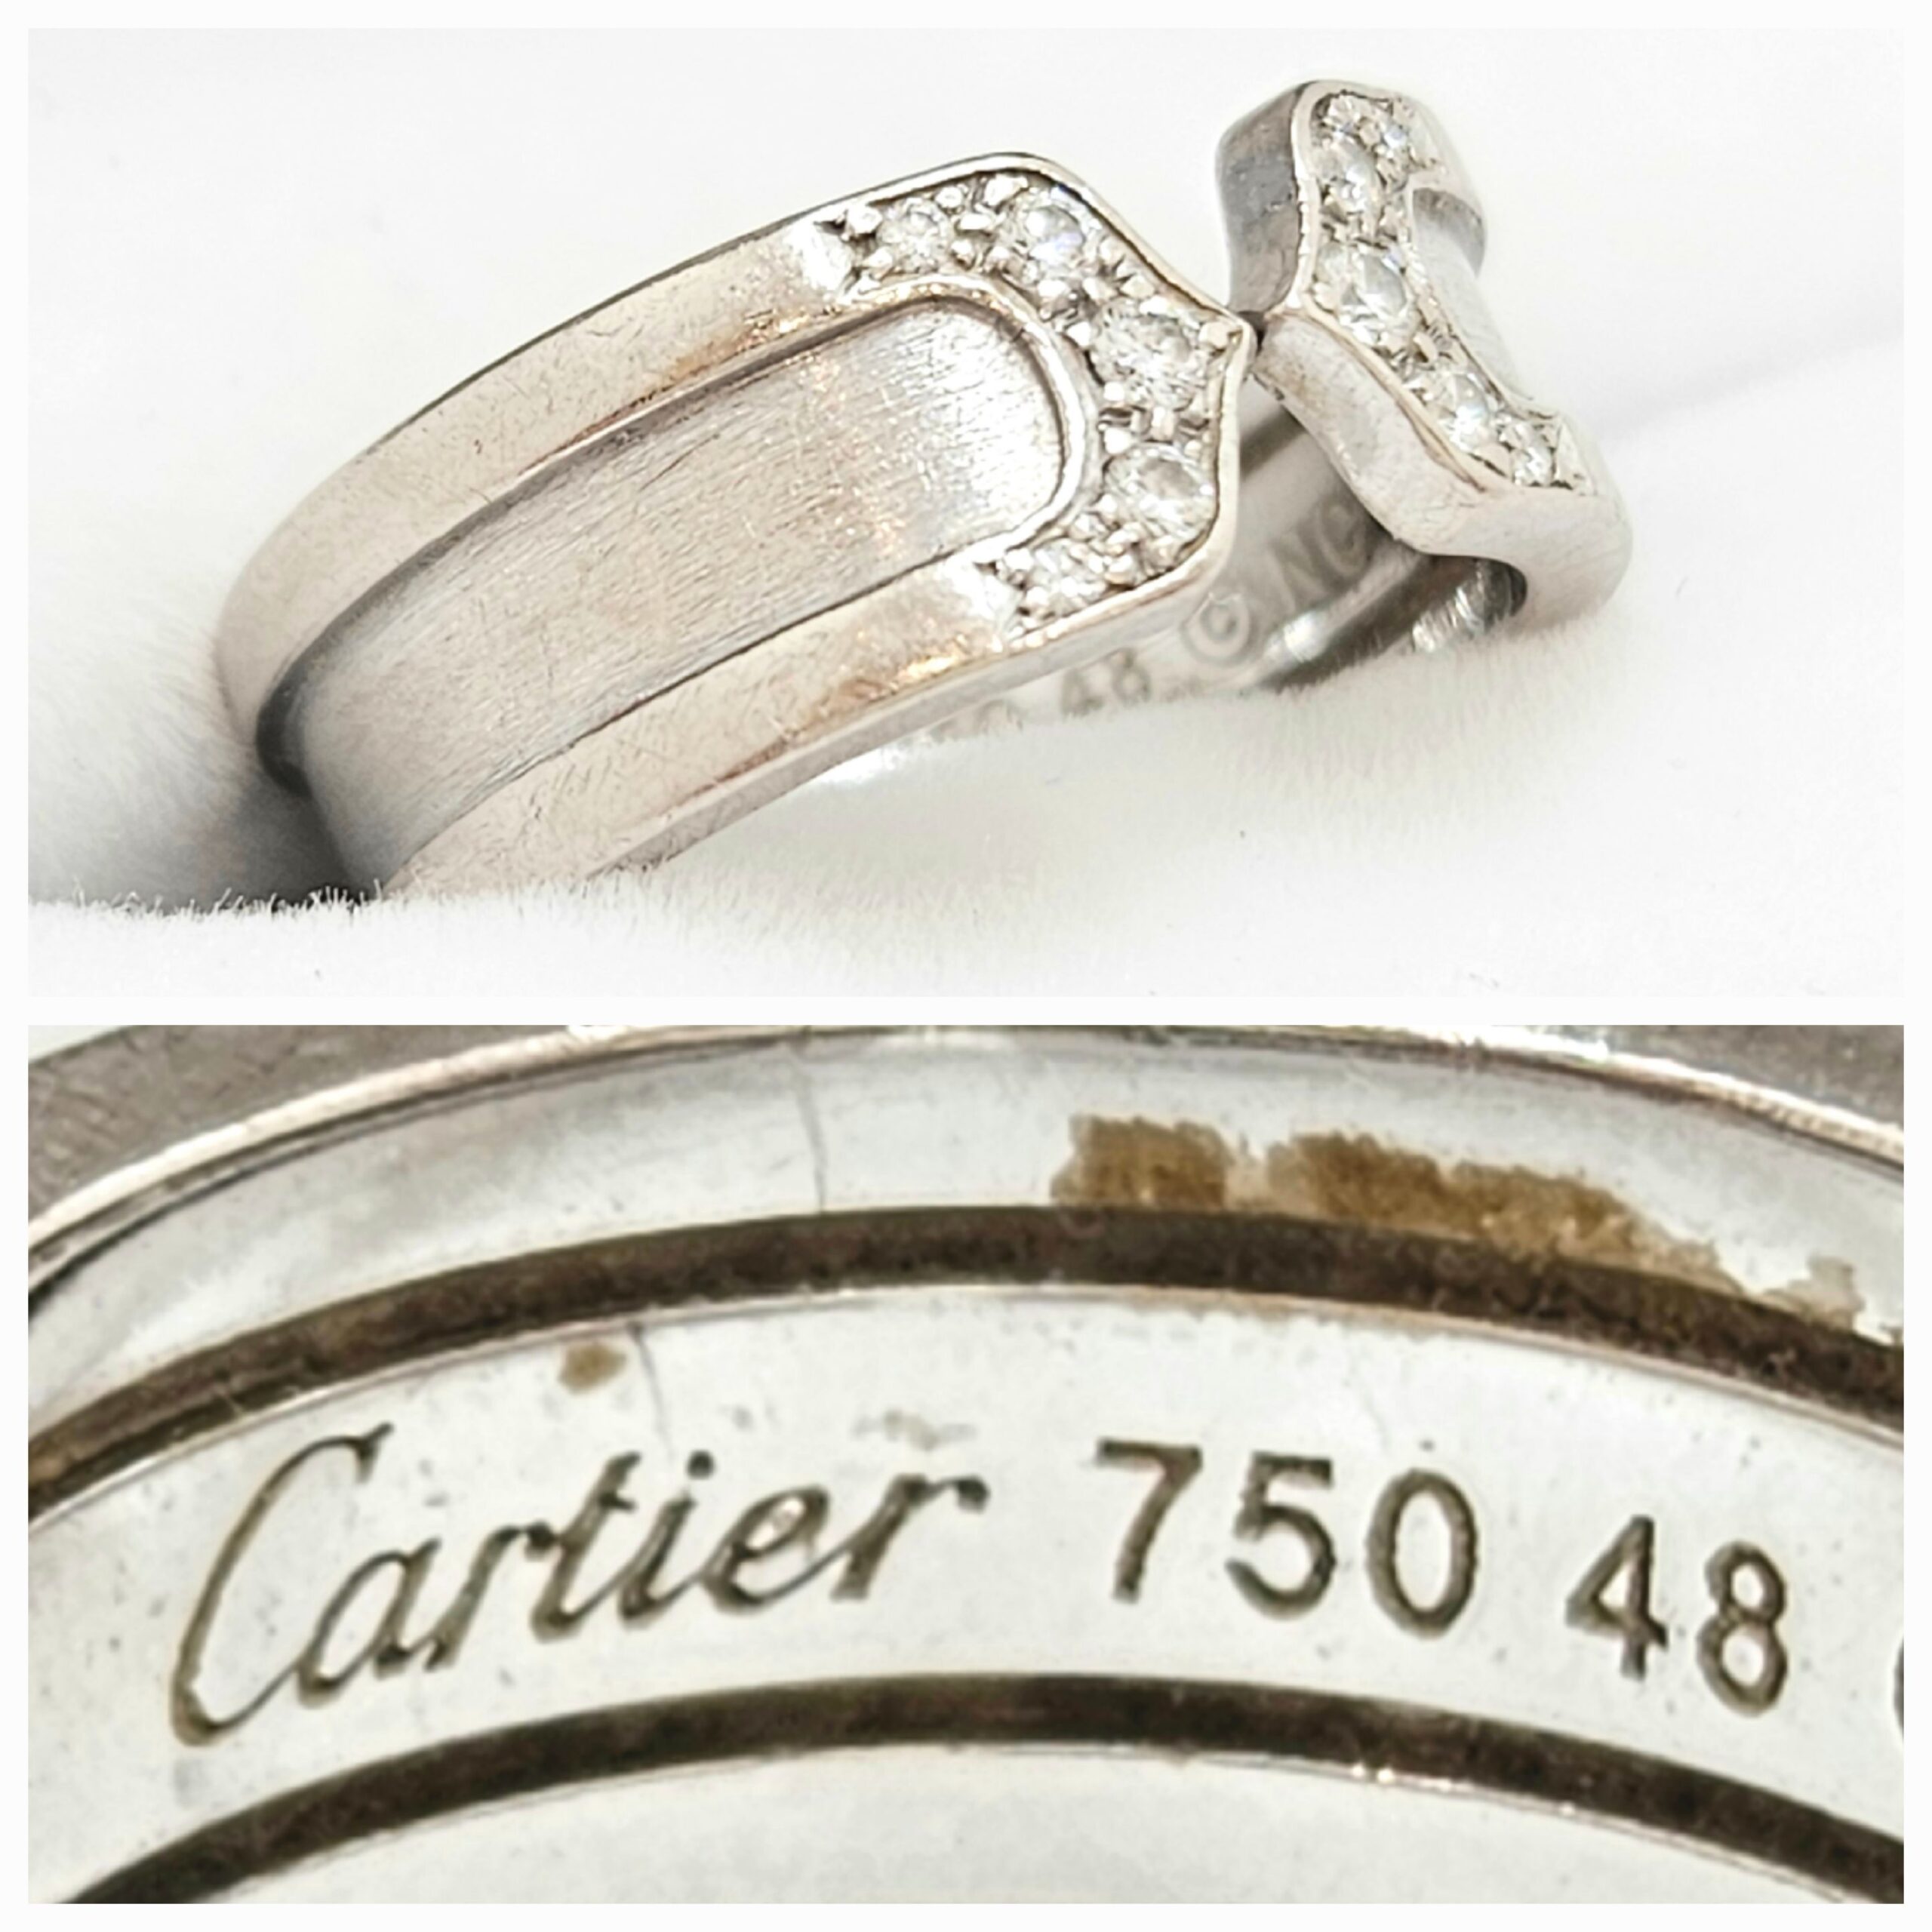 Cartier C2リングをお買取りしました✨ | 静岡の三島・伊東、神奈川の小田原でブランド品を売るなら買取専門いちふじ